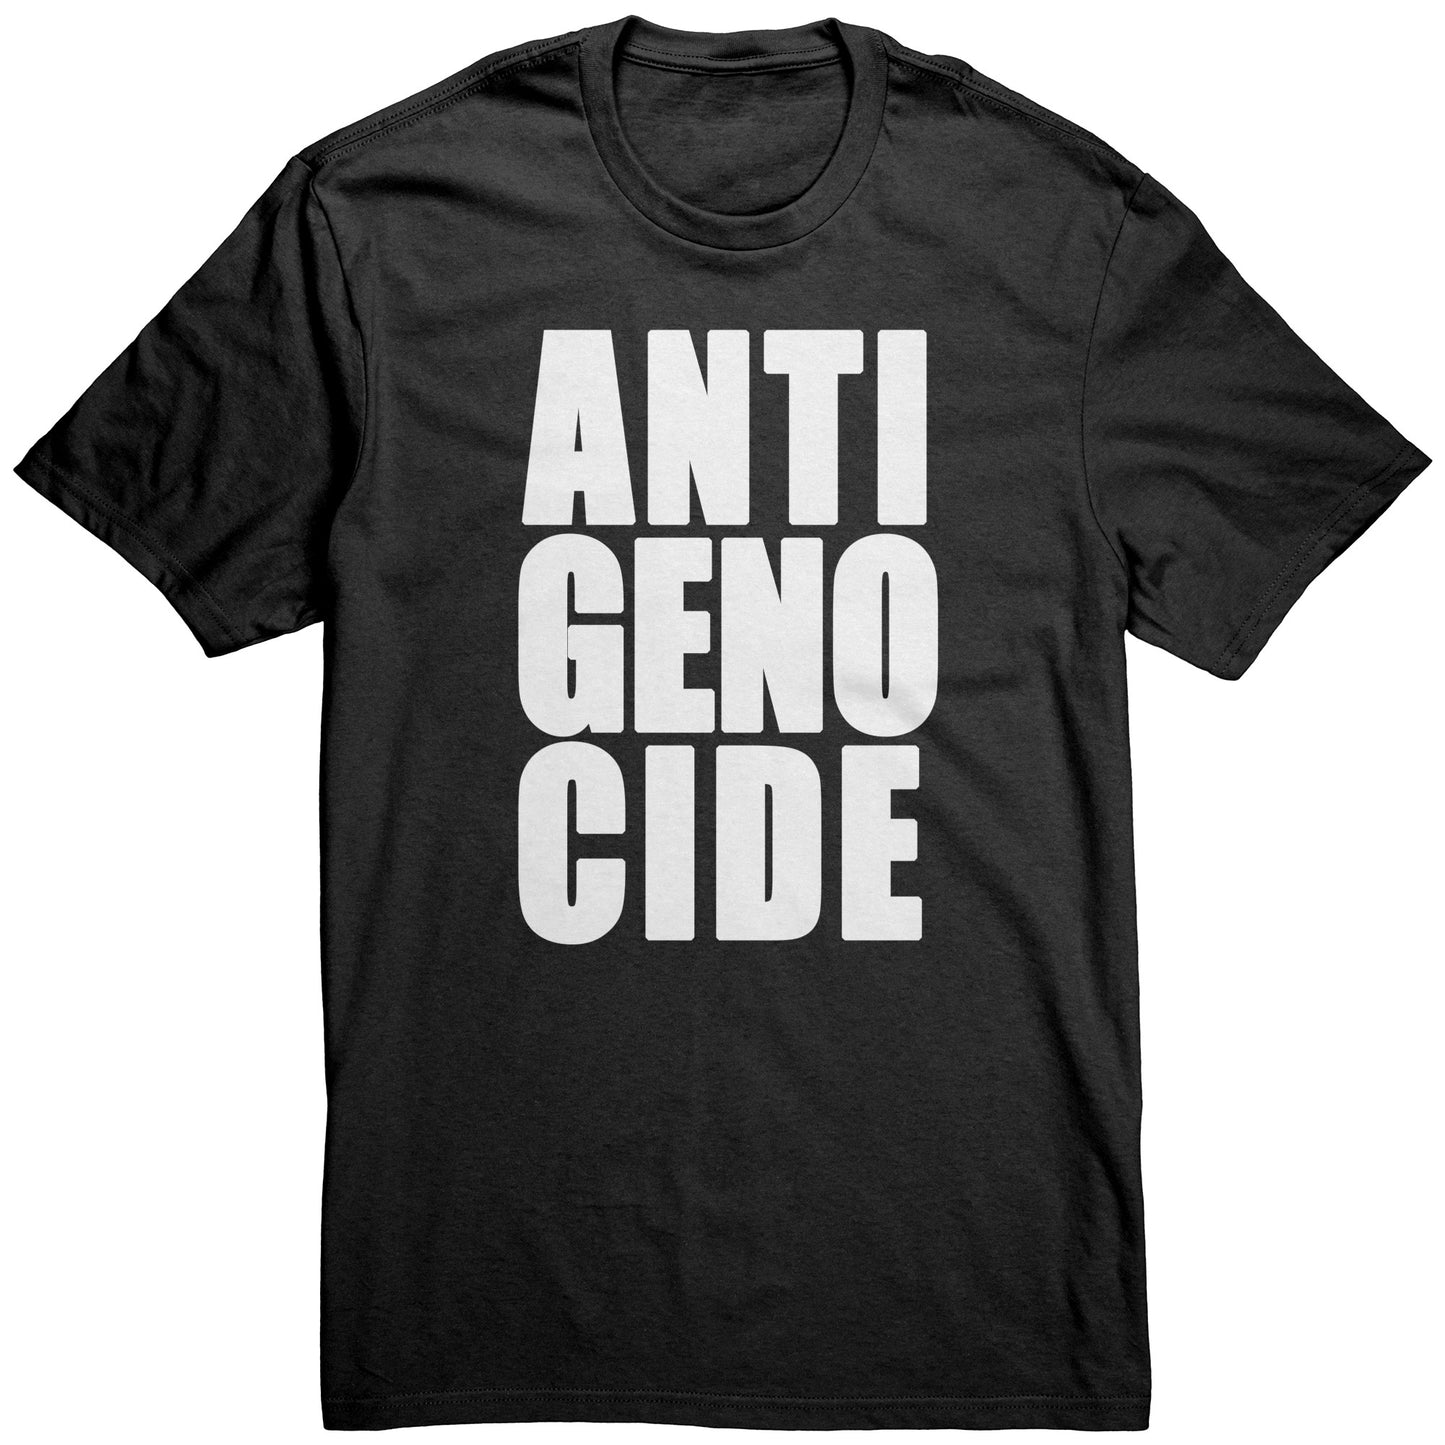 Adult Tee "Anti Genocide" (white print)